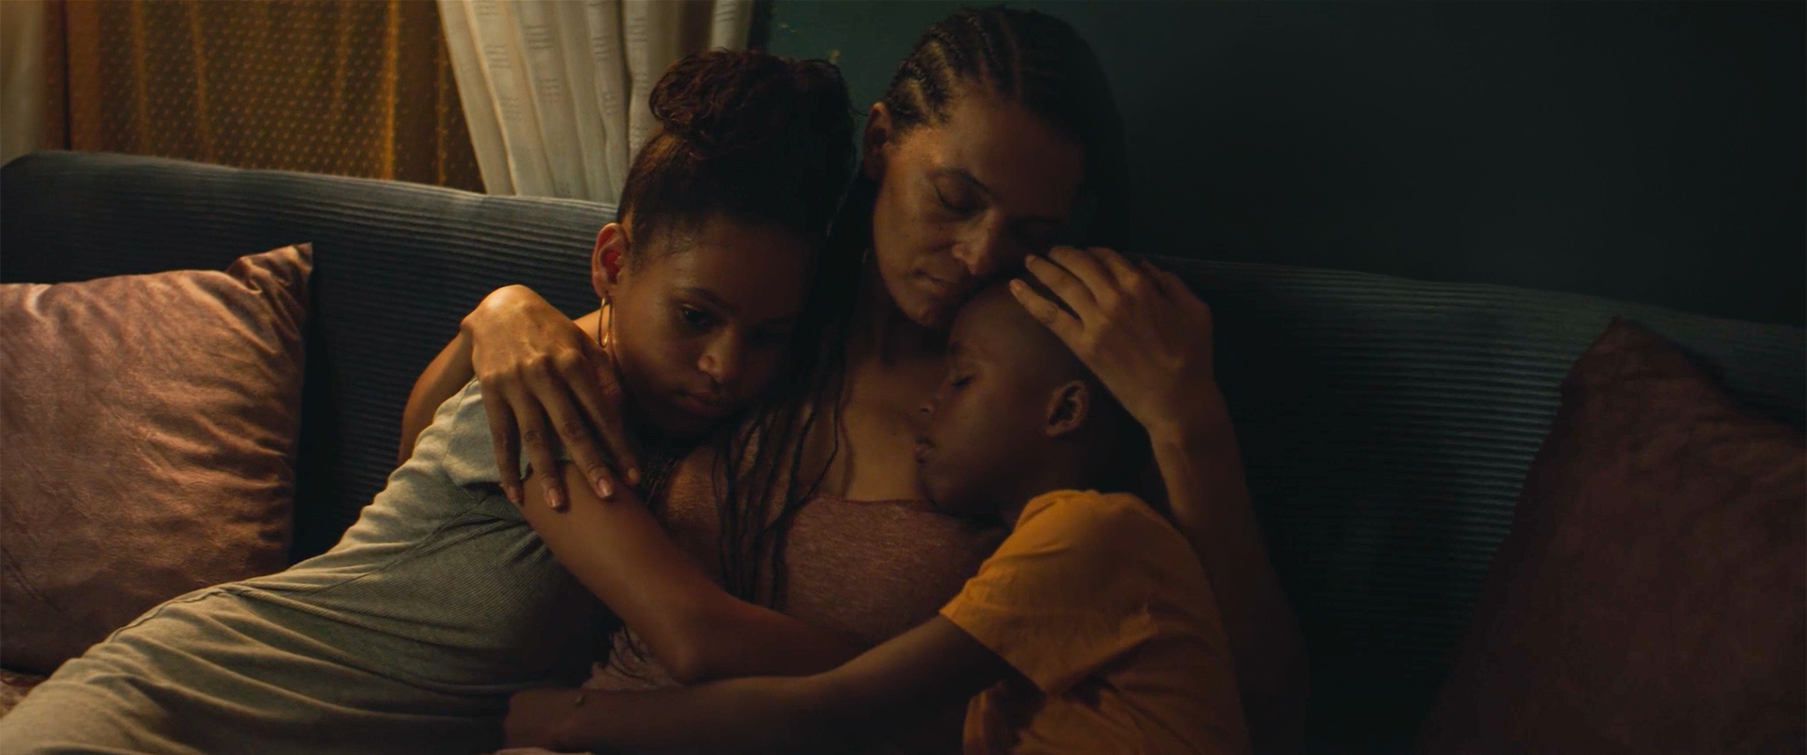 ARRAY Acquires Dominican Republic’s Oscar Submission “Bantú Mama,” Clarisse Albrecht Stars